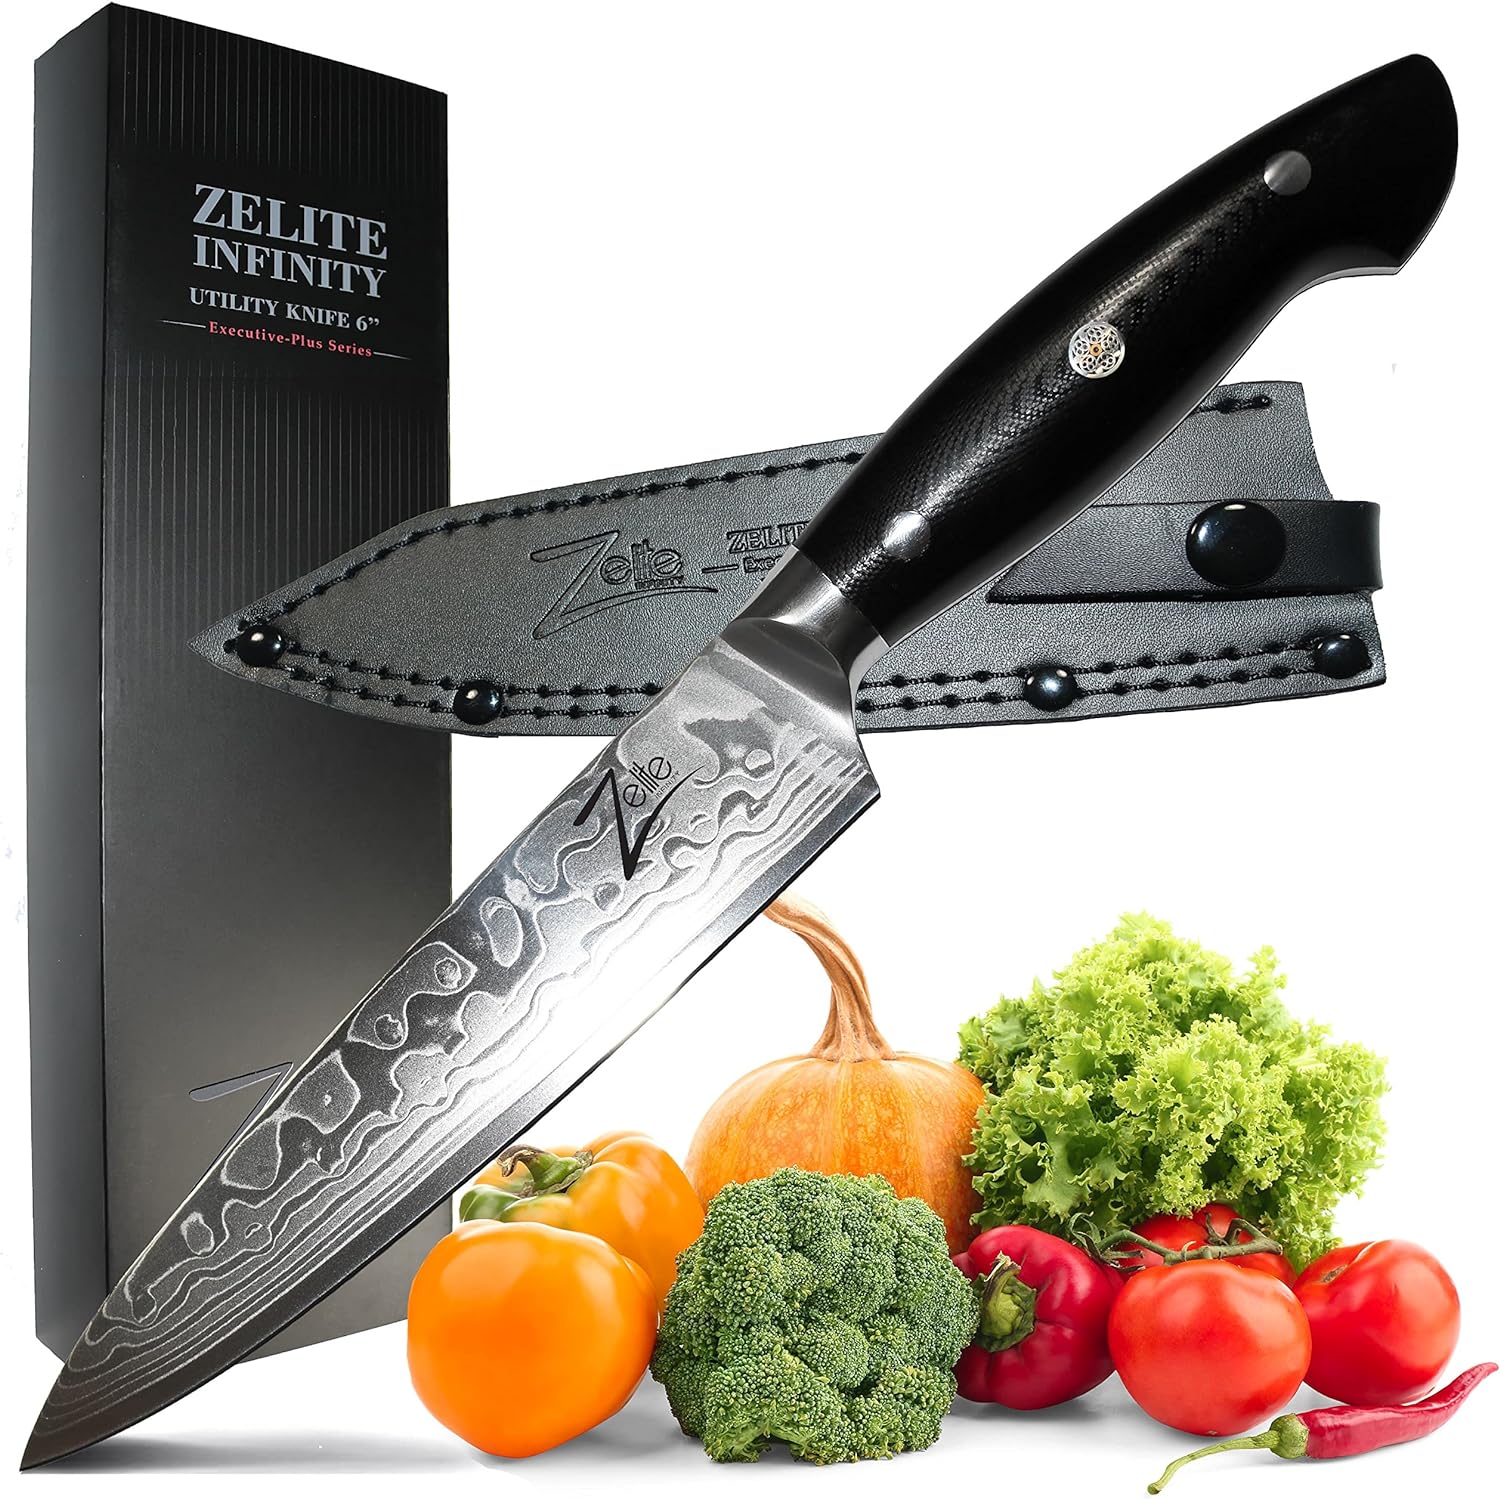 Zelite Infinity Utility Knife Kitchen, 6 Inch Chef Knife, Chopping Knife, Kitchen Utility Knife - Japanese AUS-10 Super Steel 45-Layer Damascus Knife - Razor Sharp Kitchen Knife - Leather Sheath